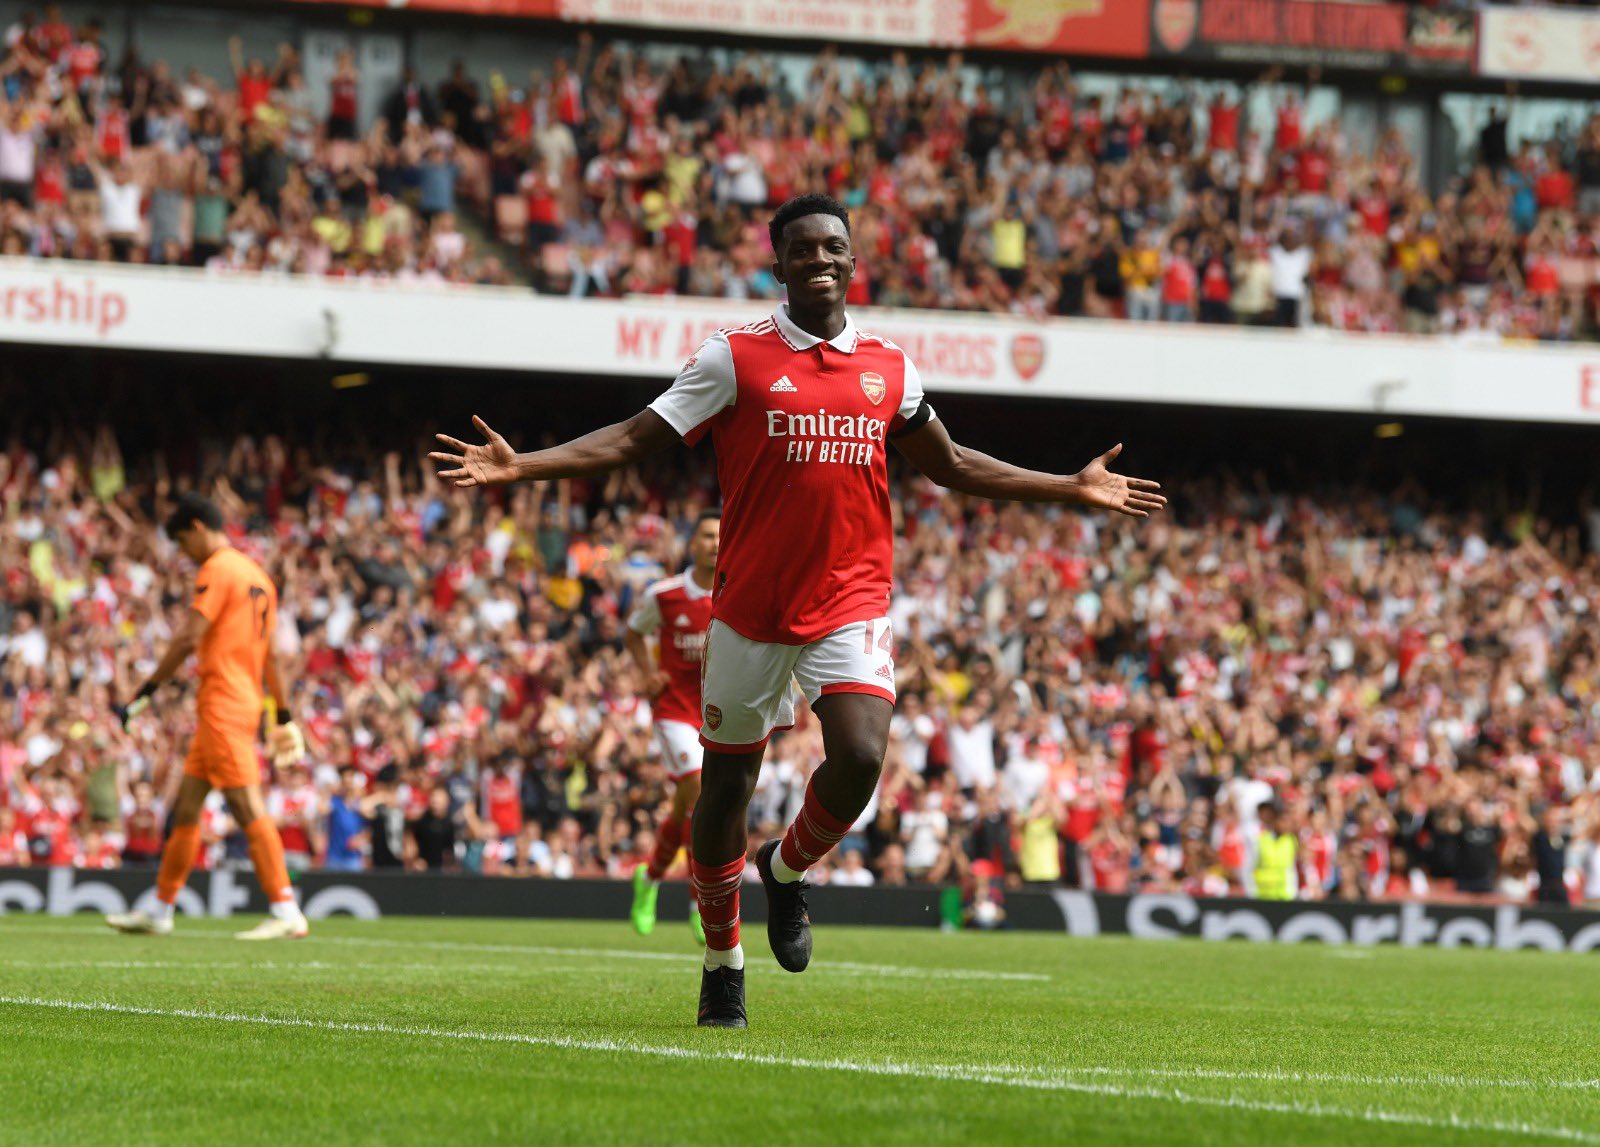 English-Ghanaian forward Eddie Nketiah provides assist in Arsenal’s win over Brighton